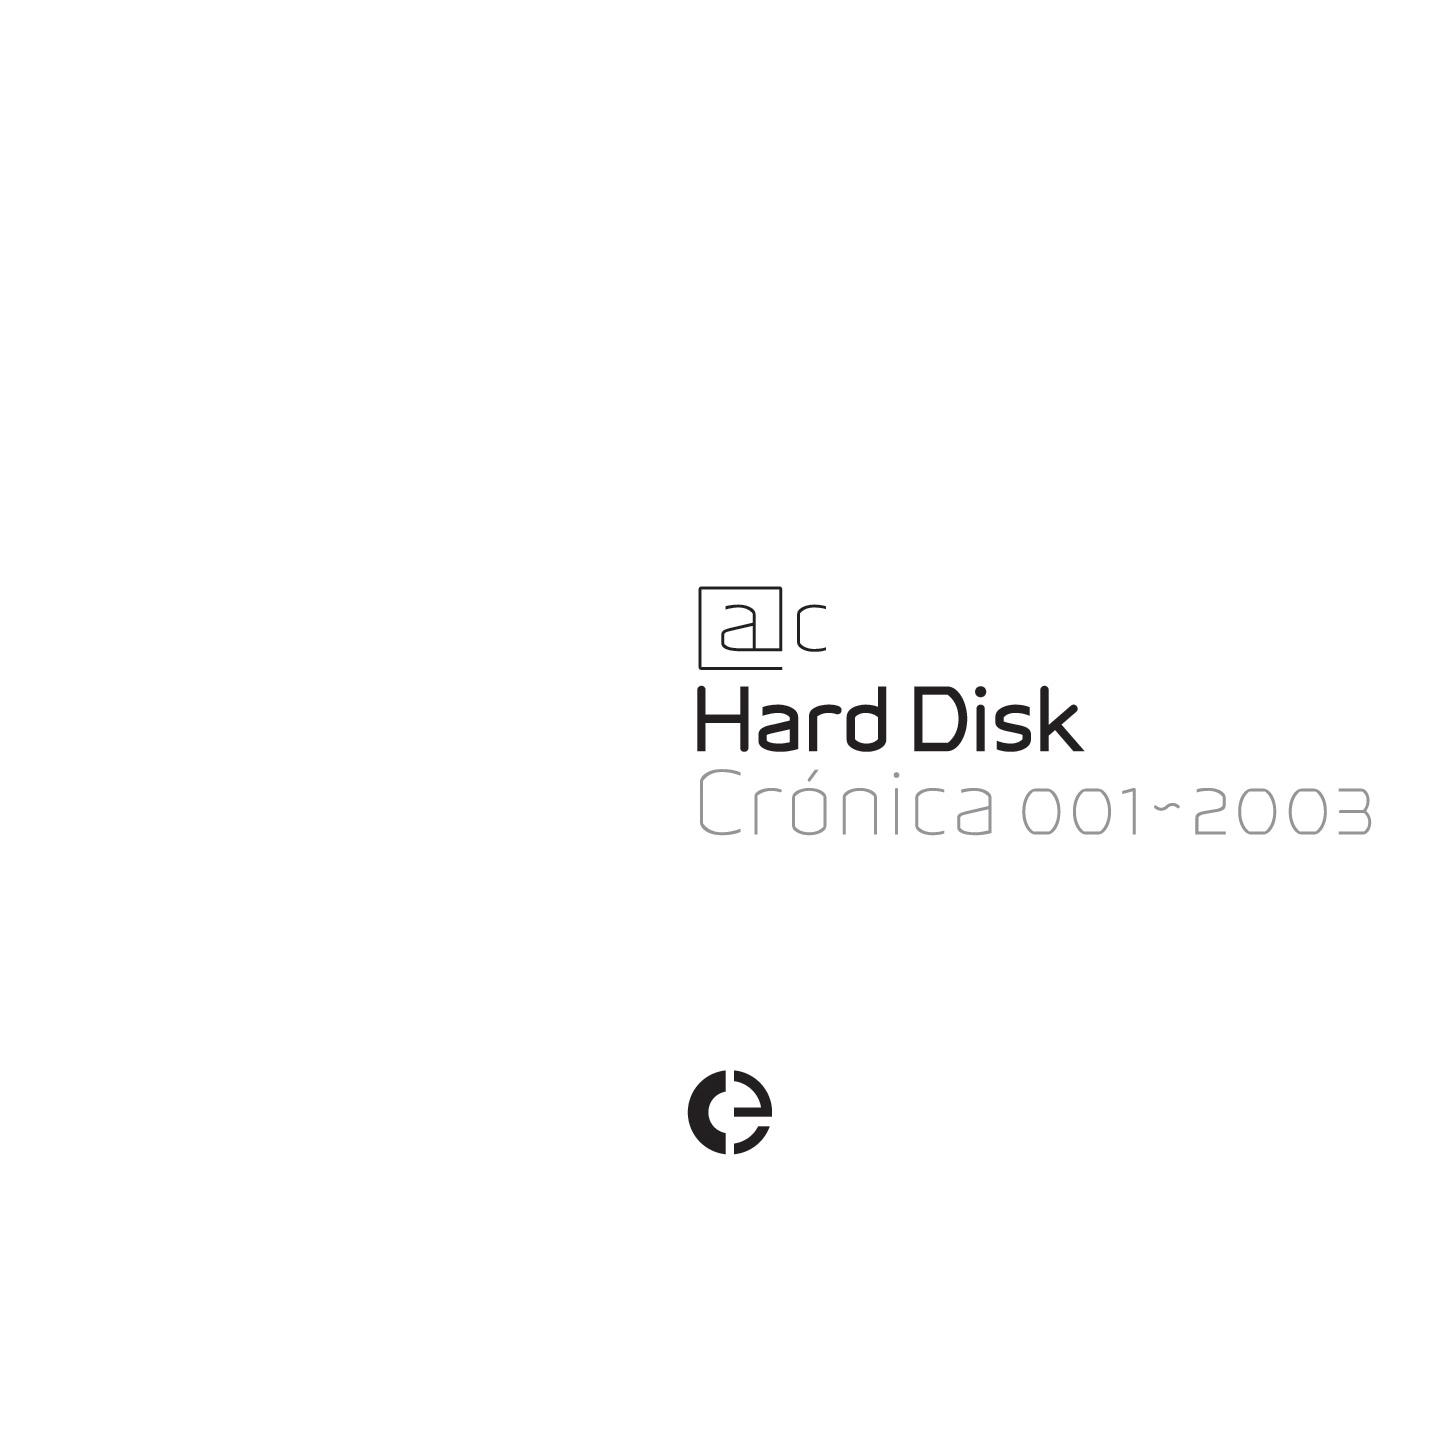 Pedro Almeida - Hard Disk, Pt. 4